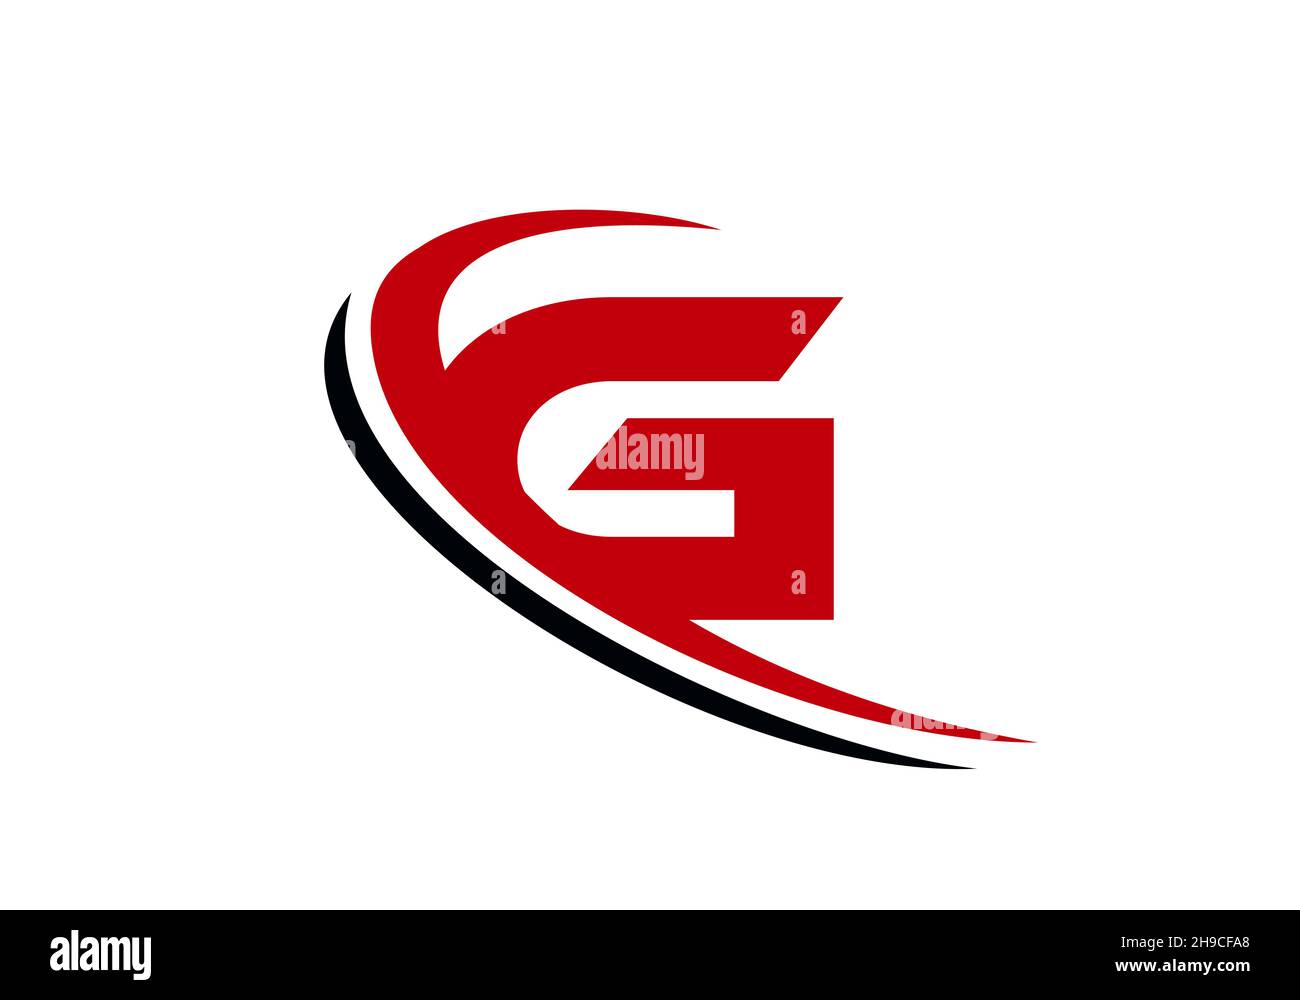 G Letter Business Logo Template. Initial G logo design for real estate ...